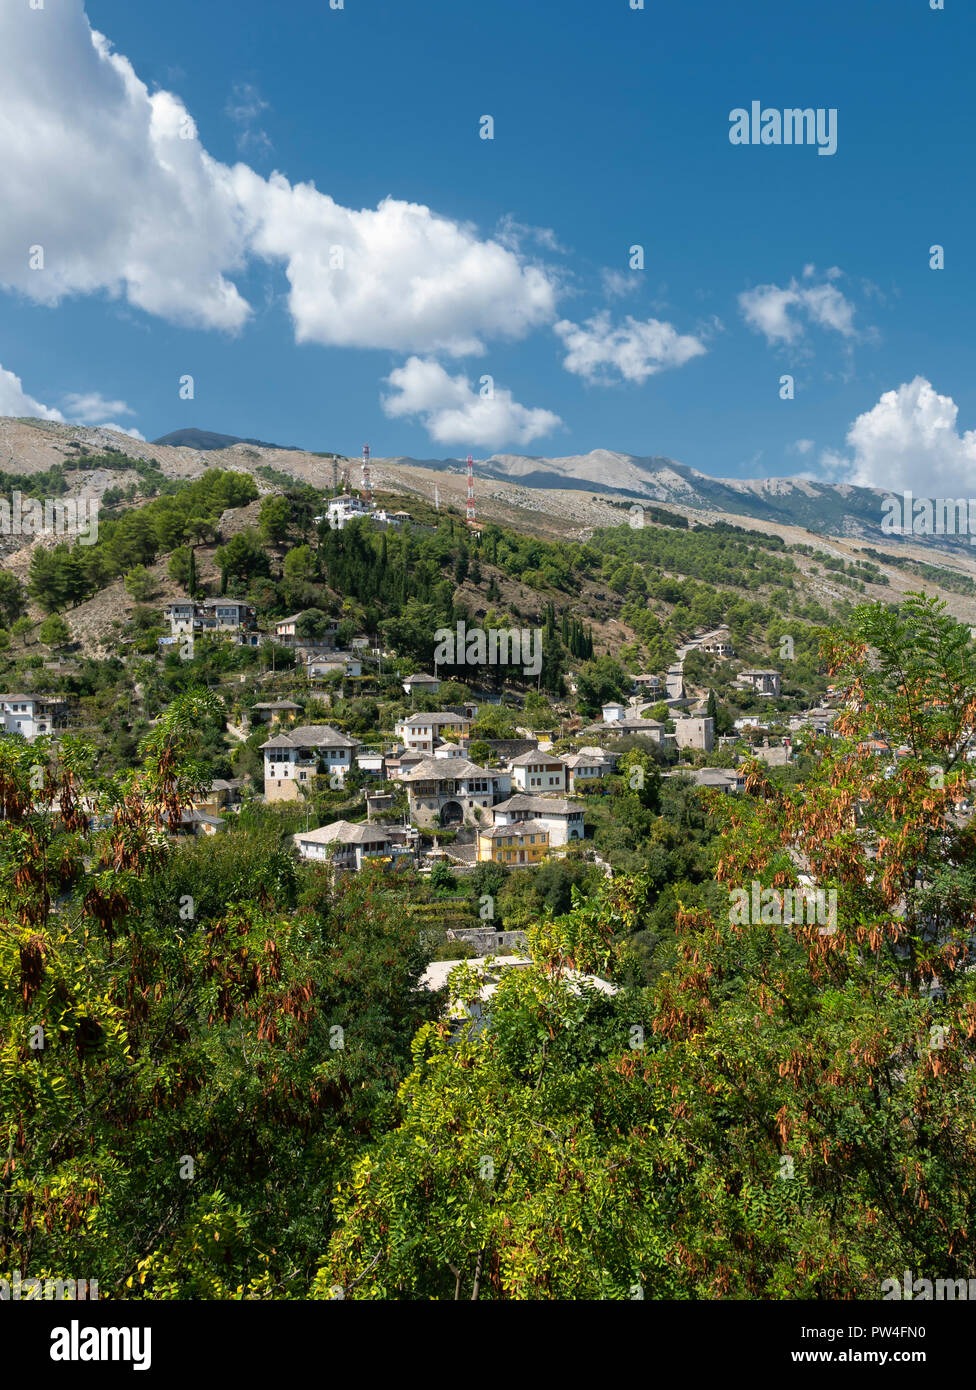 Gjirokaster, Gjirokaster County, The Republic of Albania. Stock Photo